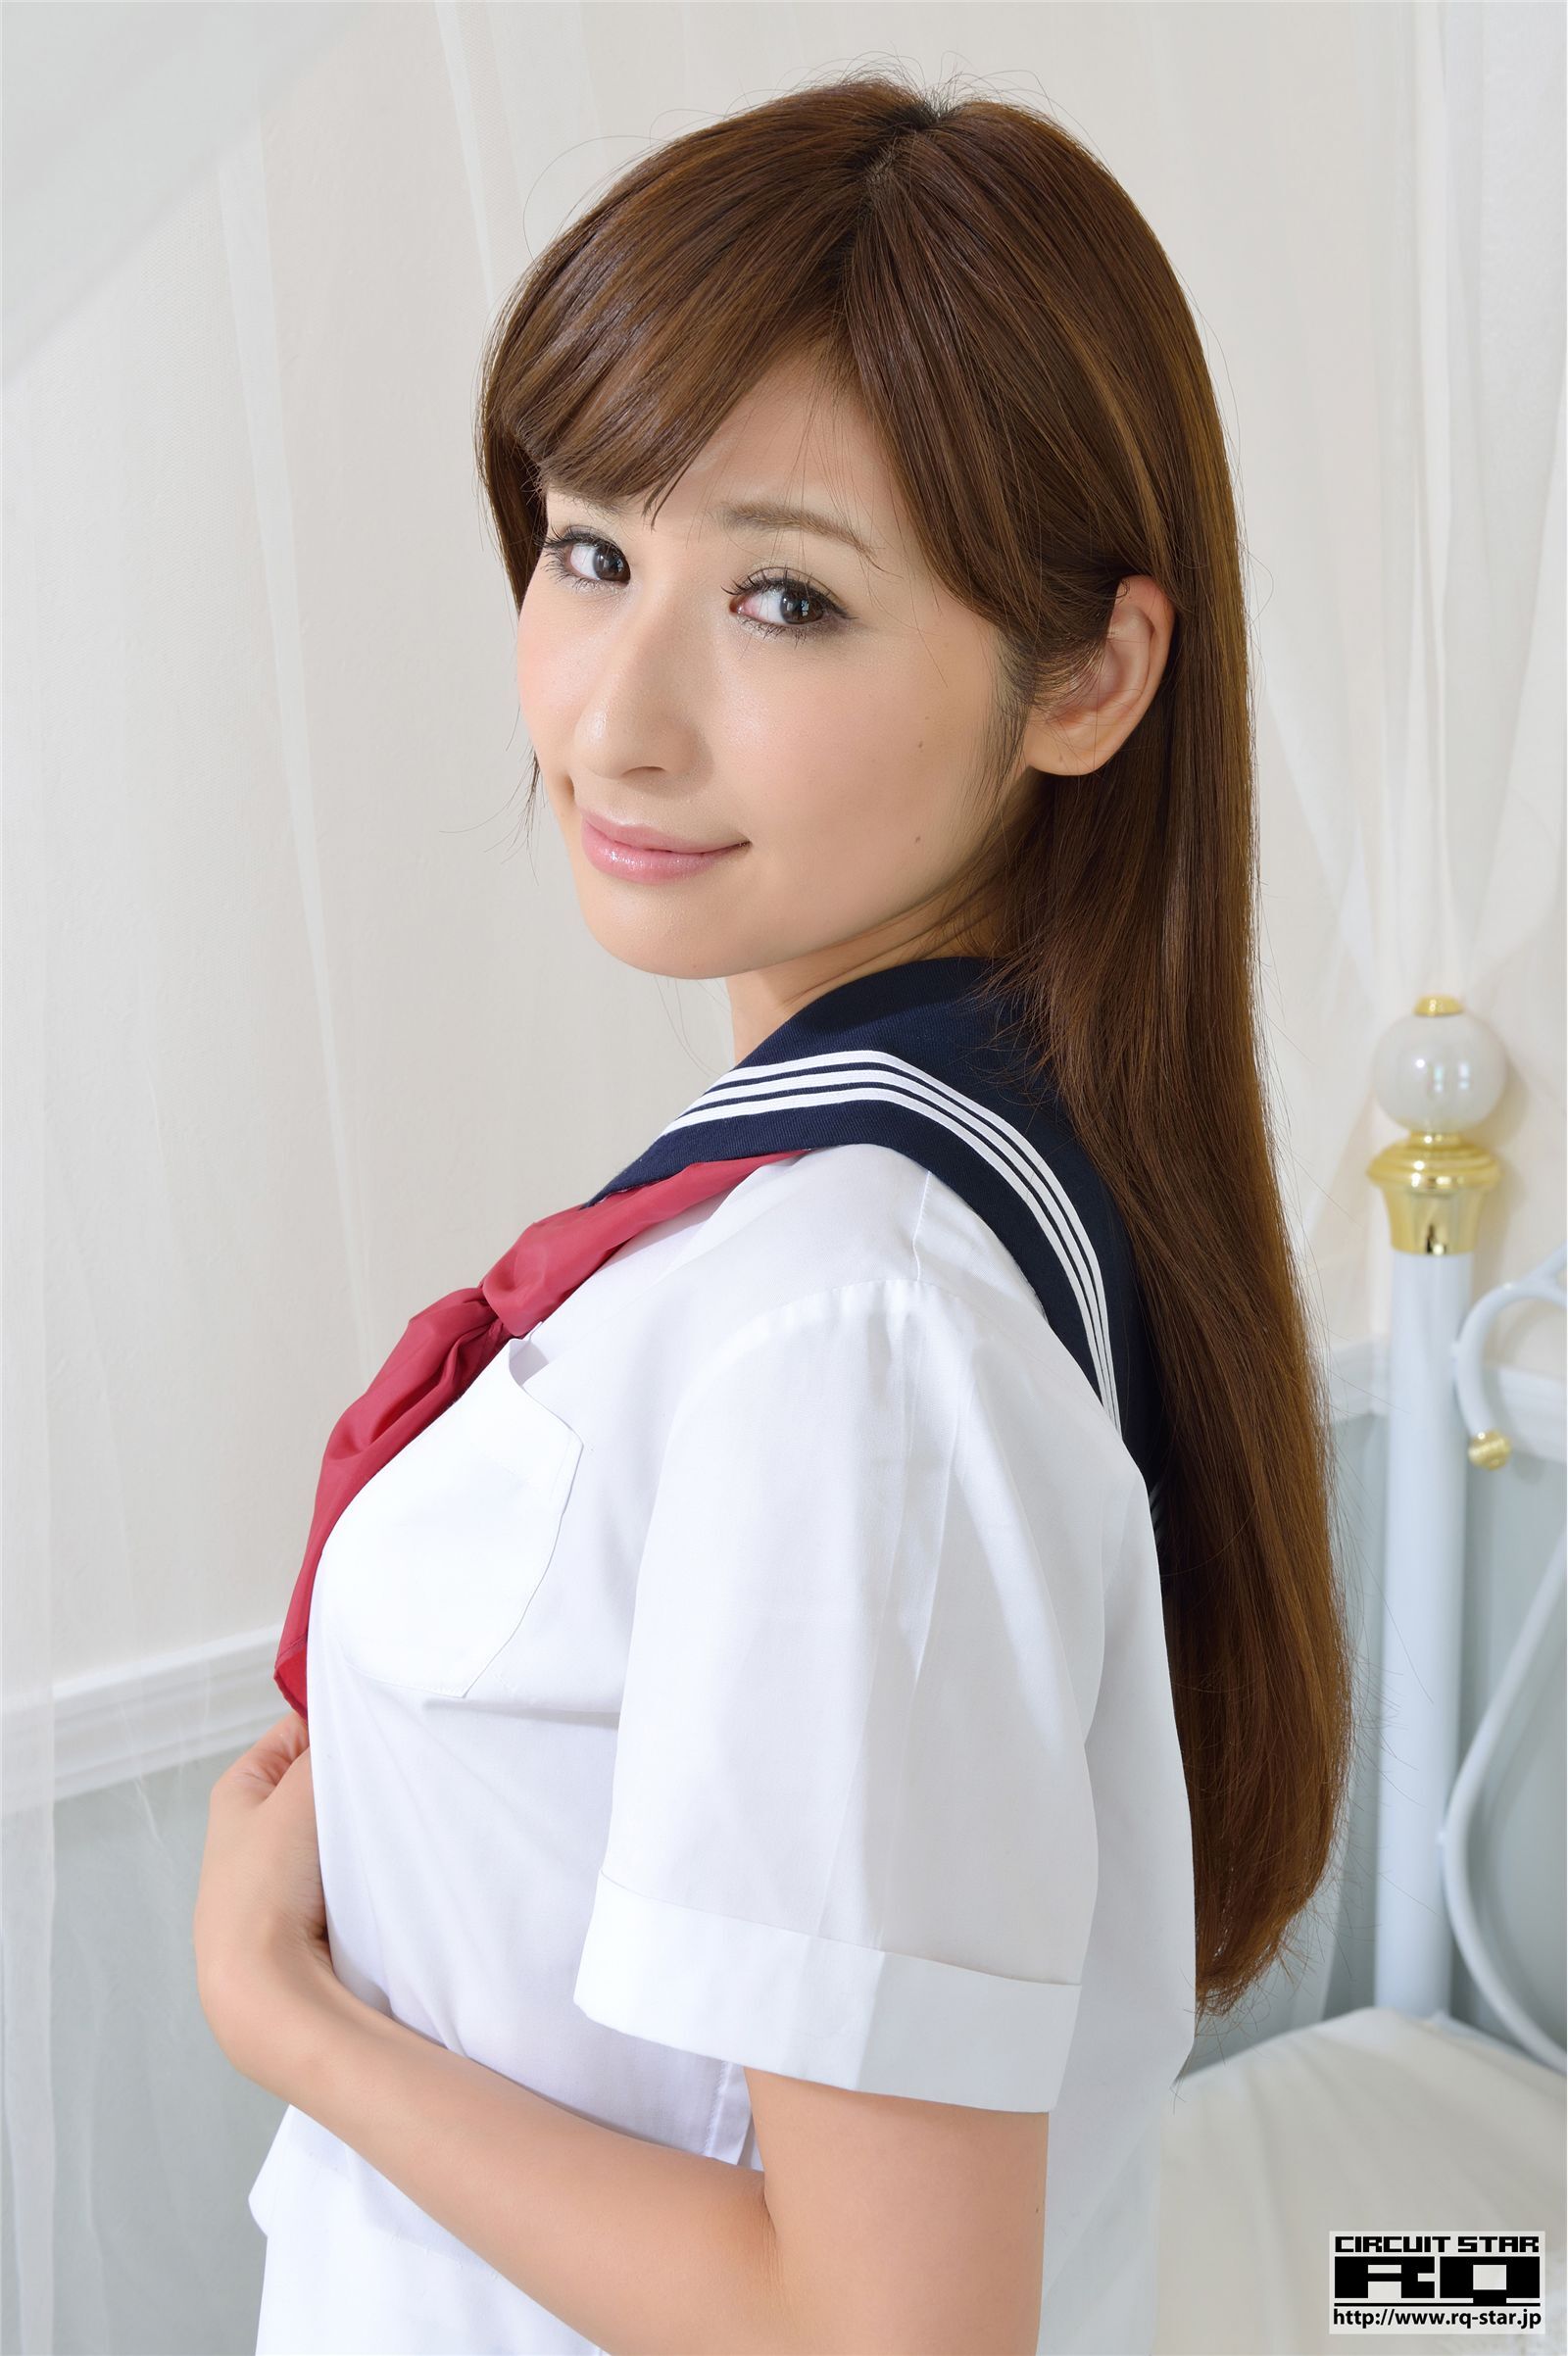 No.00684 Ma Lingxiang student uniform rq-star uniform beautiful girl